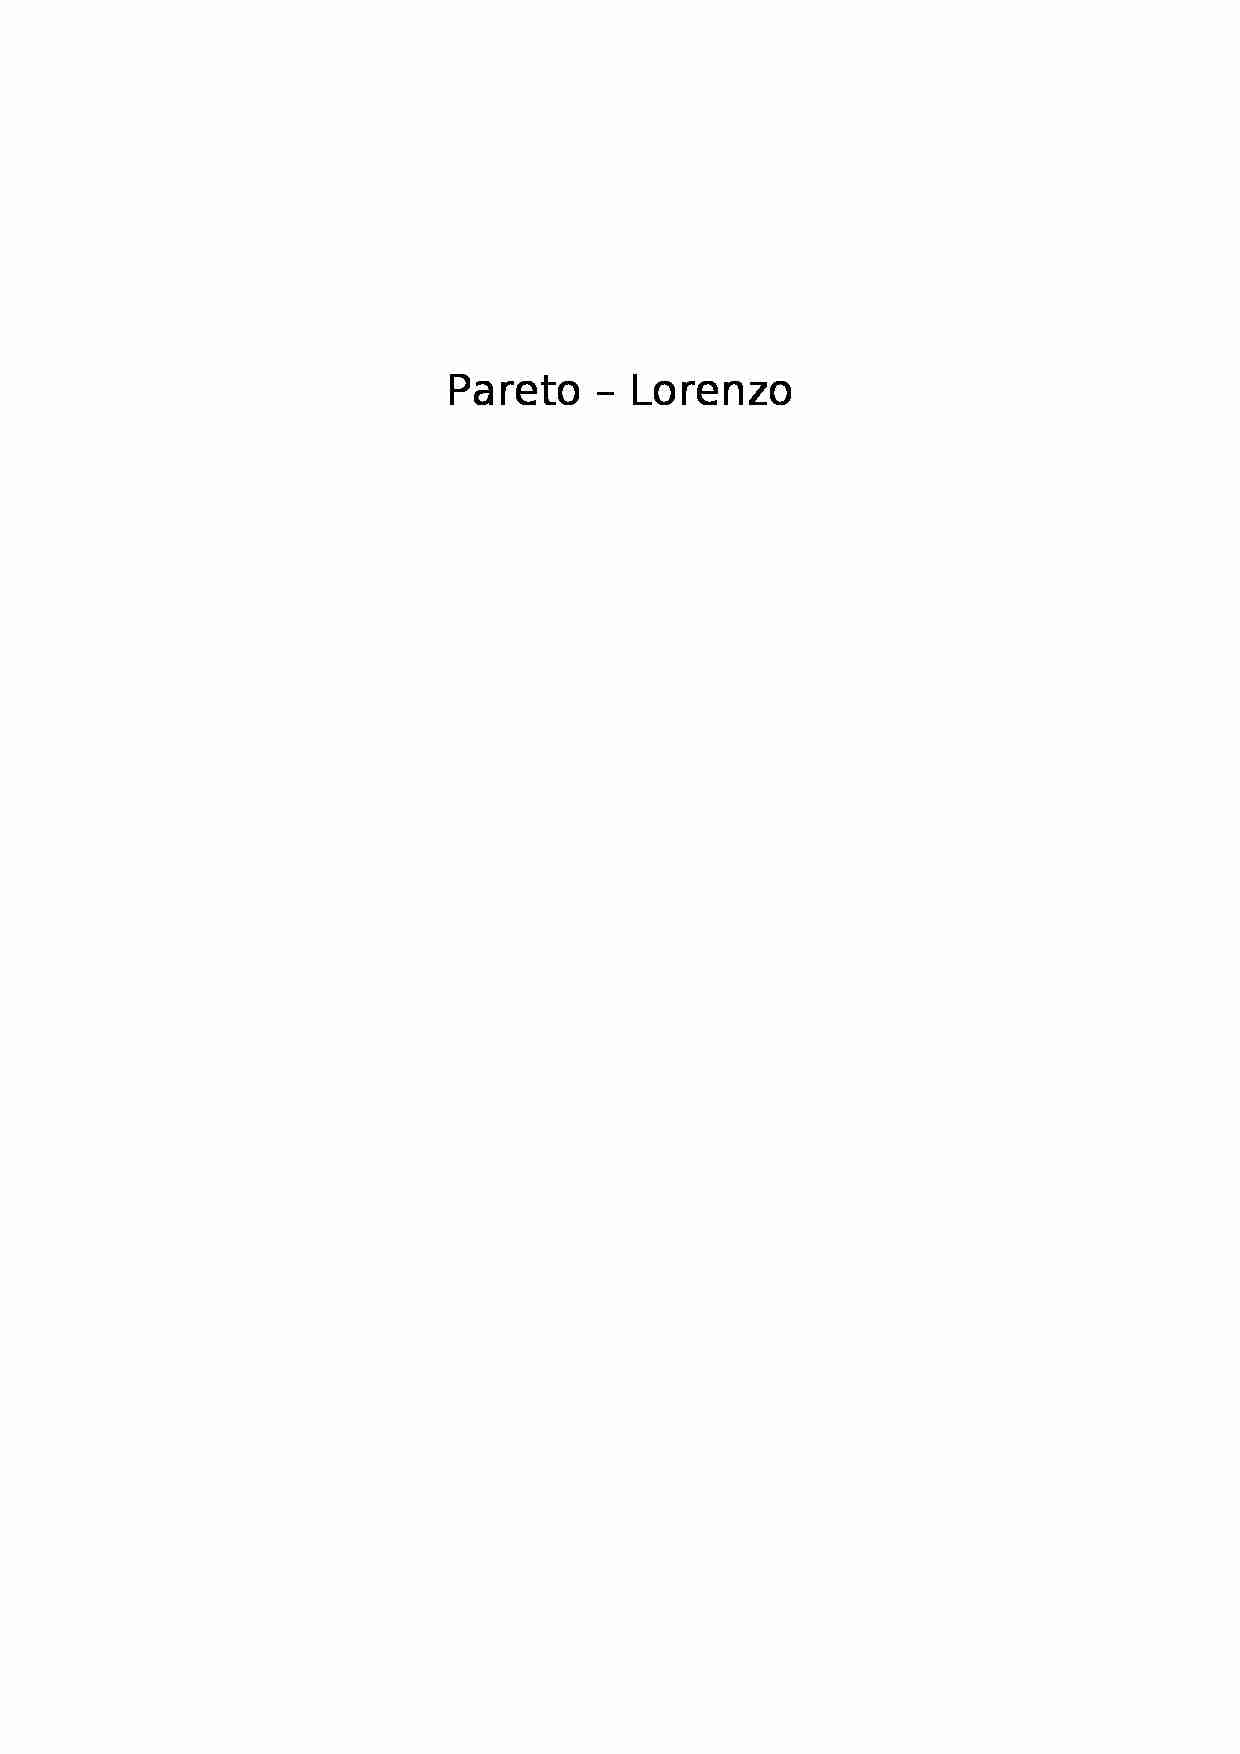 Diagram Pareto - Lorenzo - strona 1